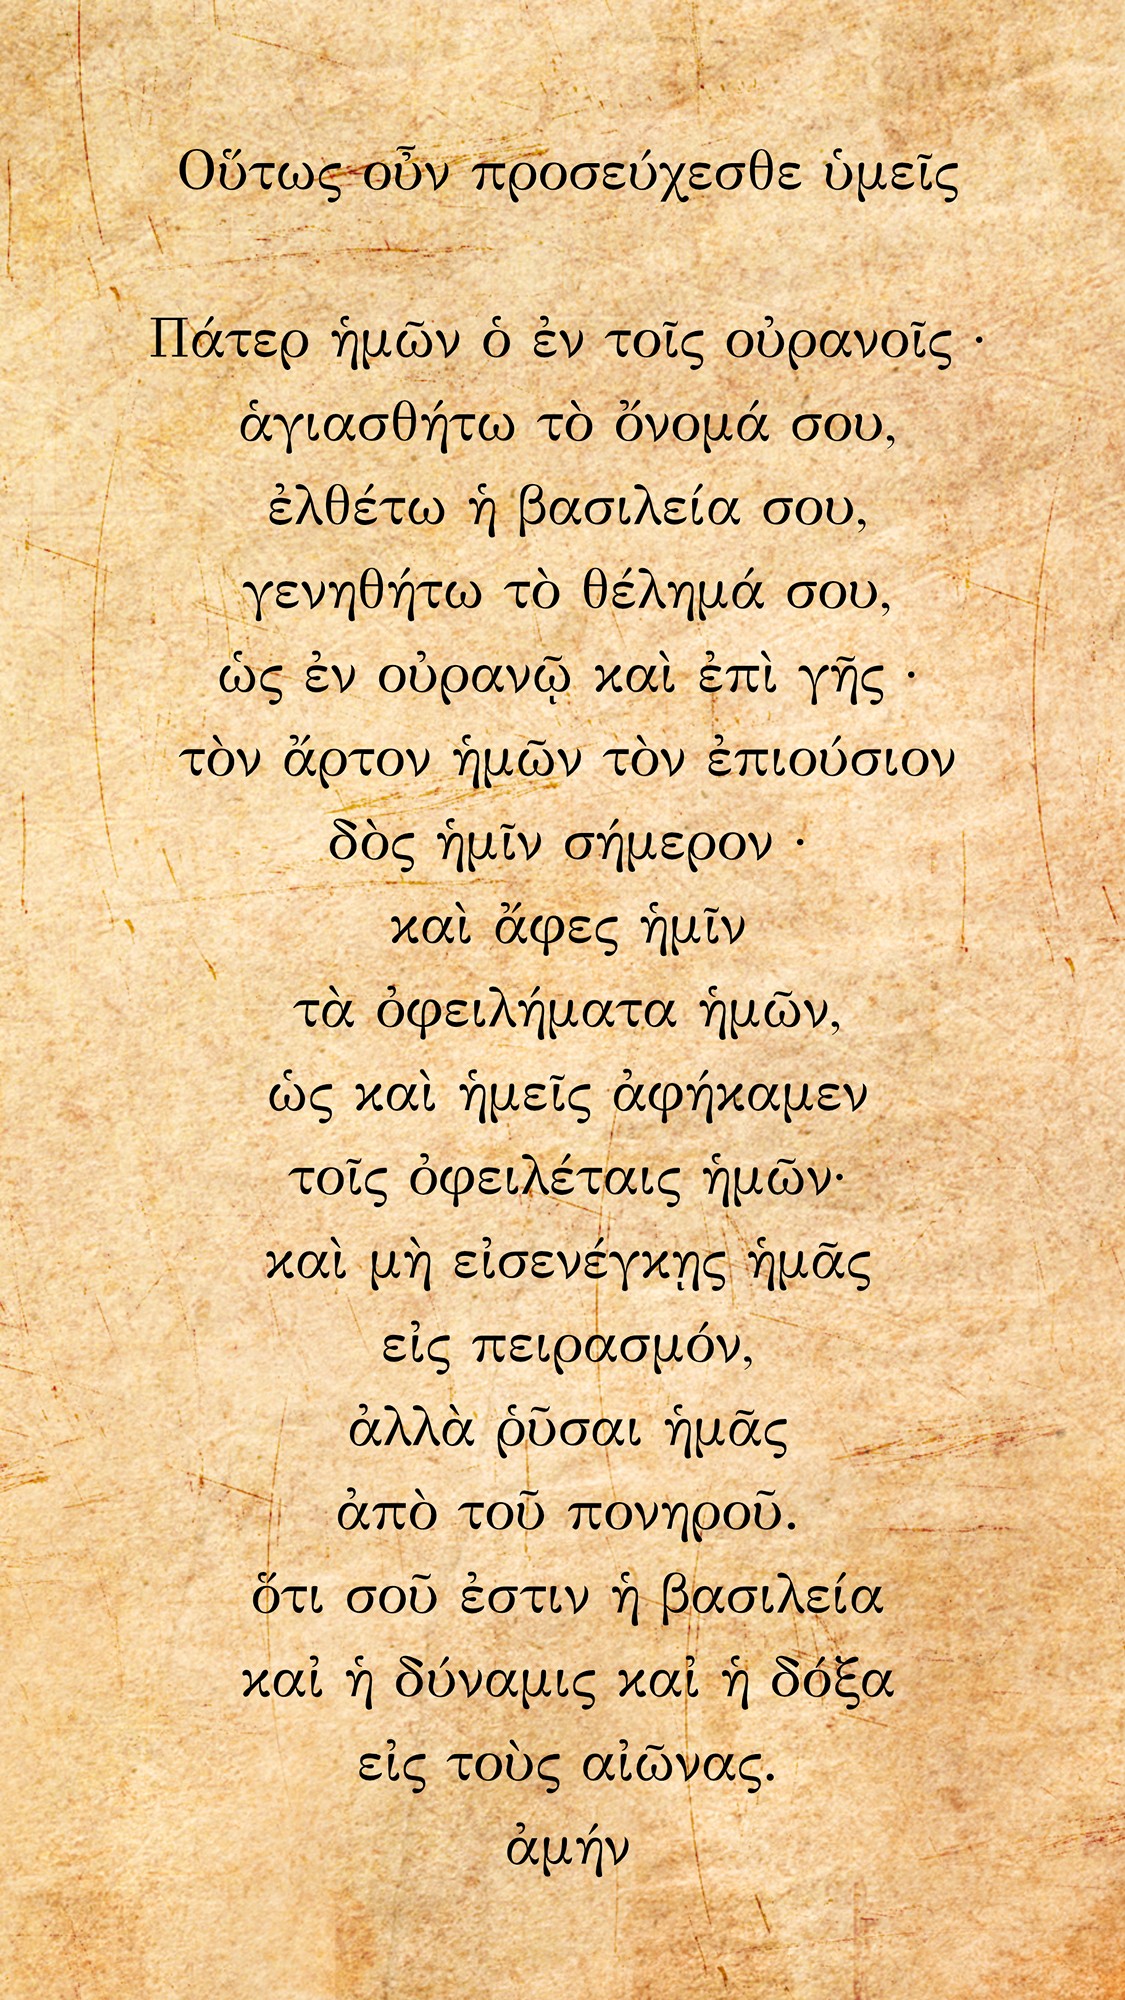 The Lord's Prayer in Greek (smartphone wallpaper)